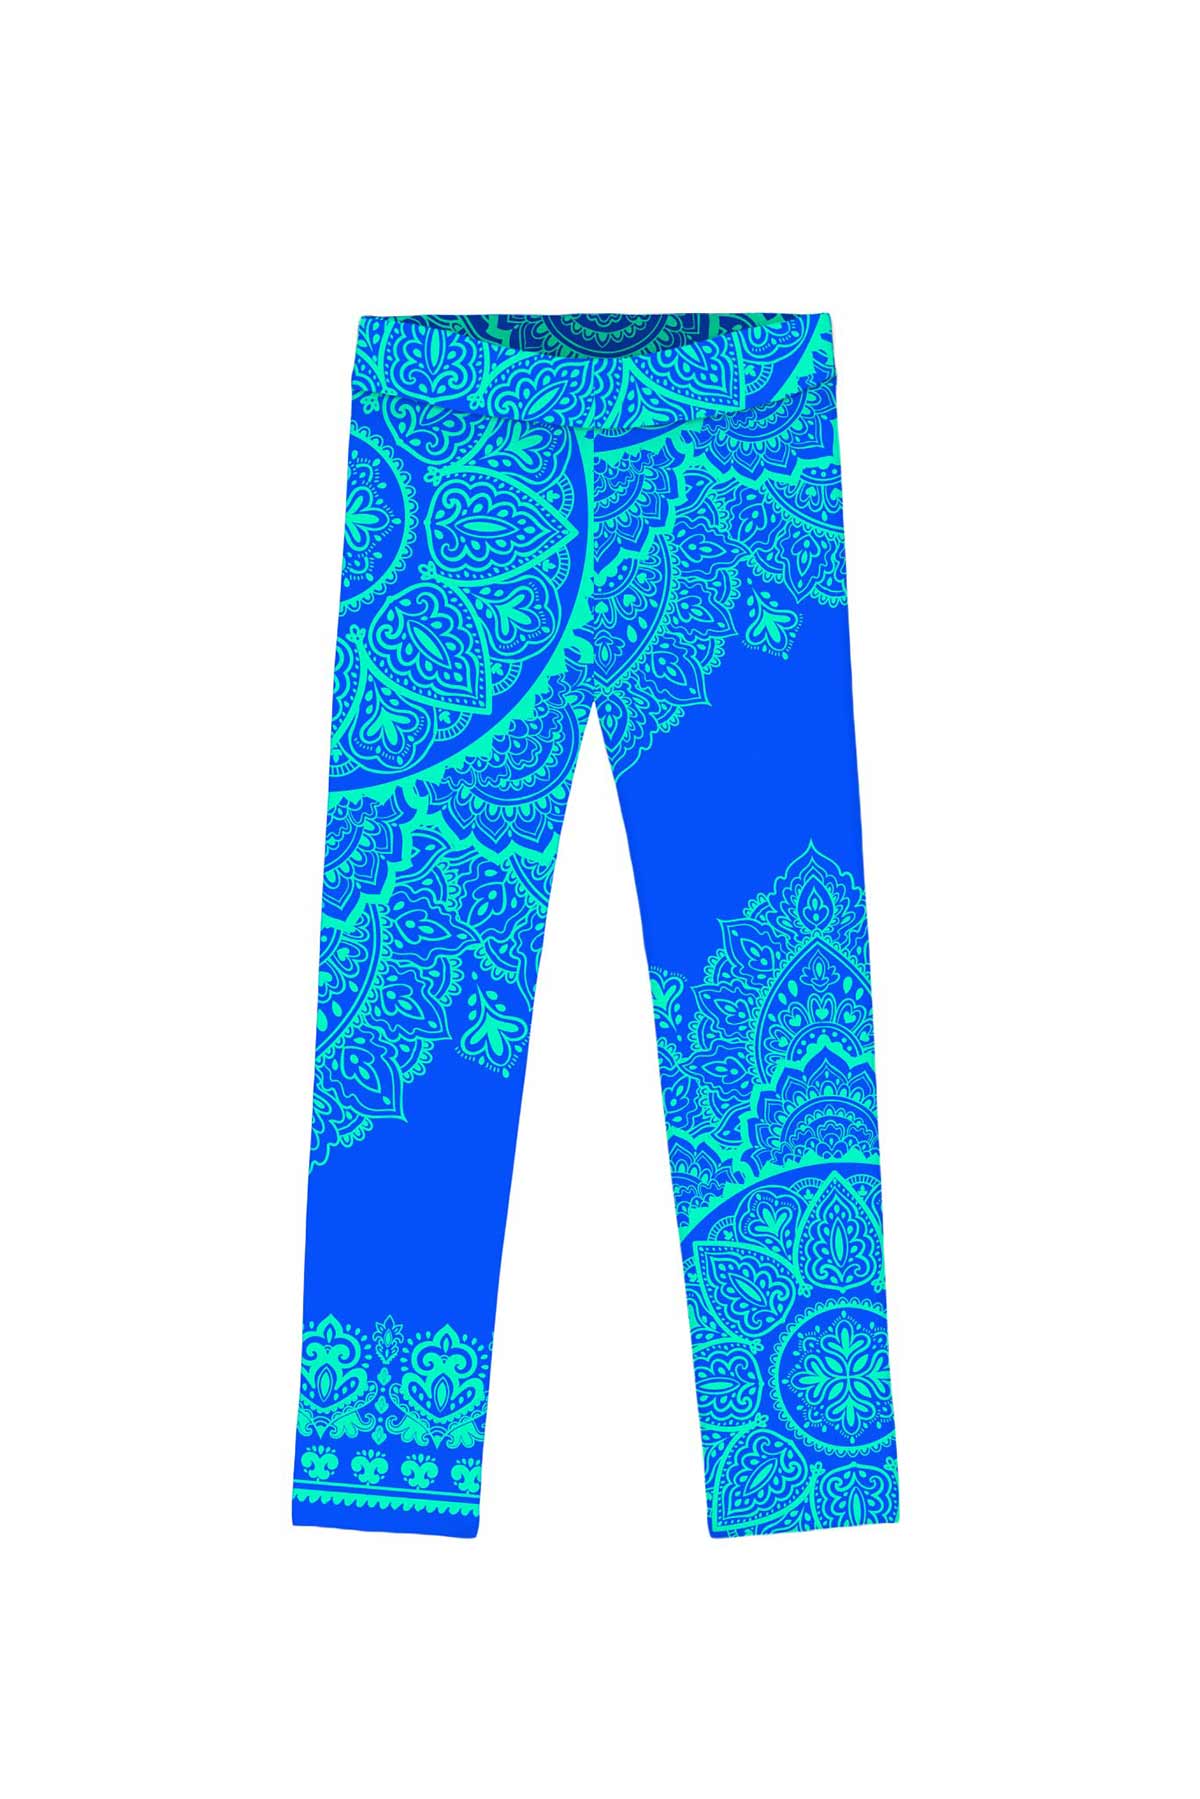 Surfing Nirvana Lucy Blue Geometric Boho Print Trendy Leggings - Kids - Pineapple Clothing